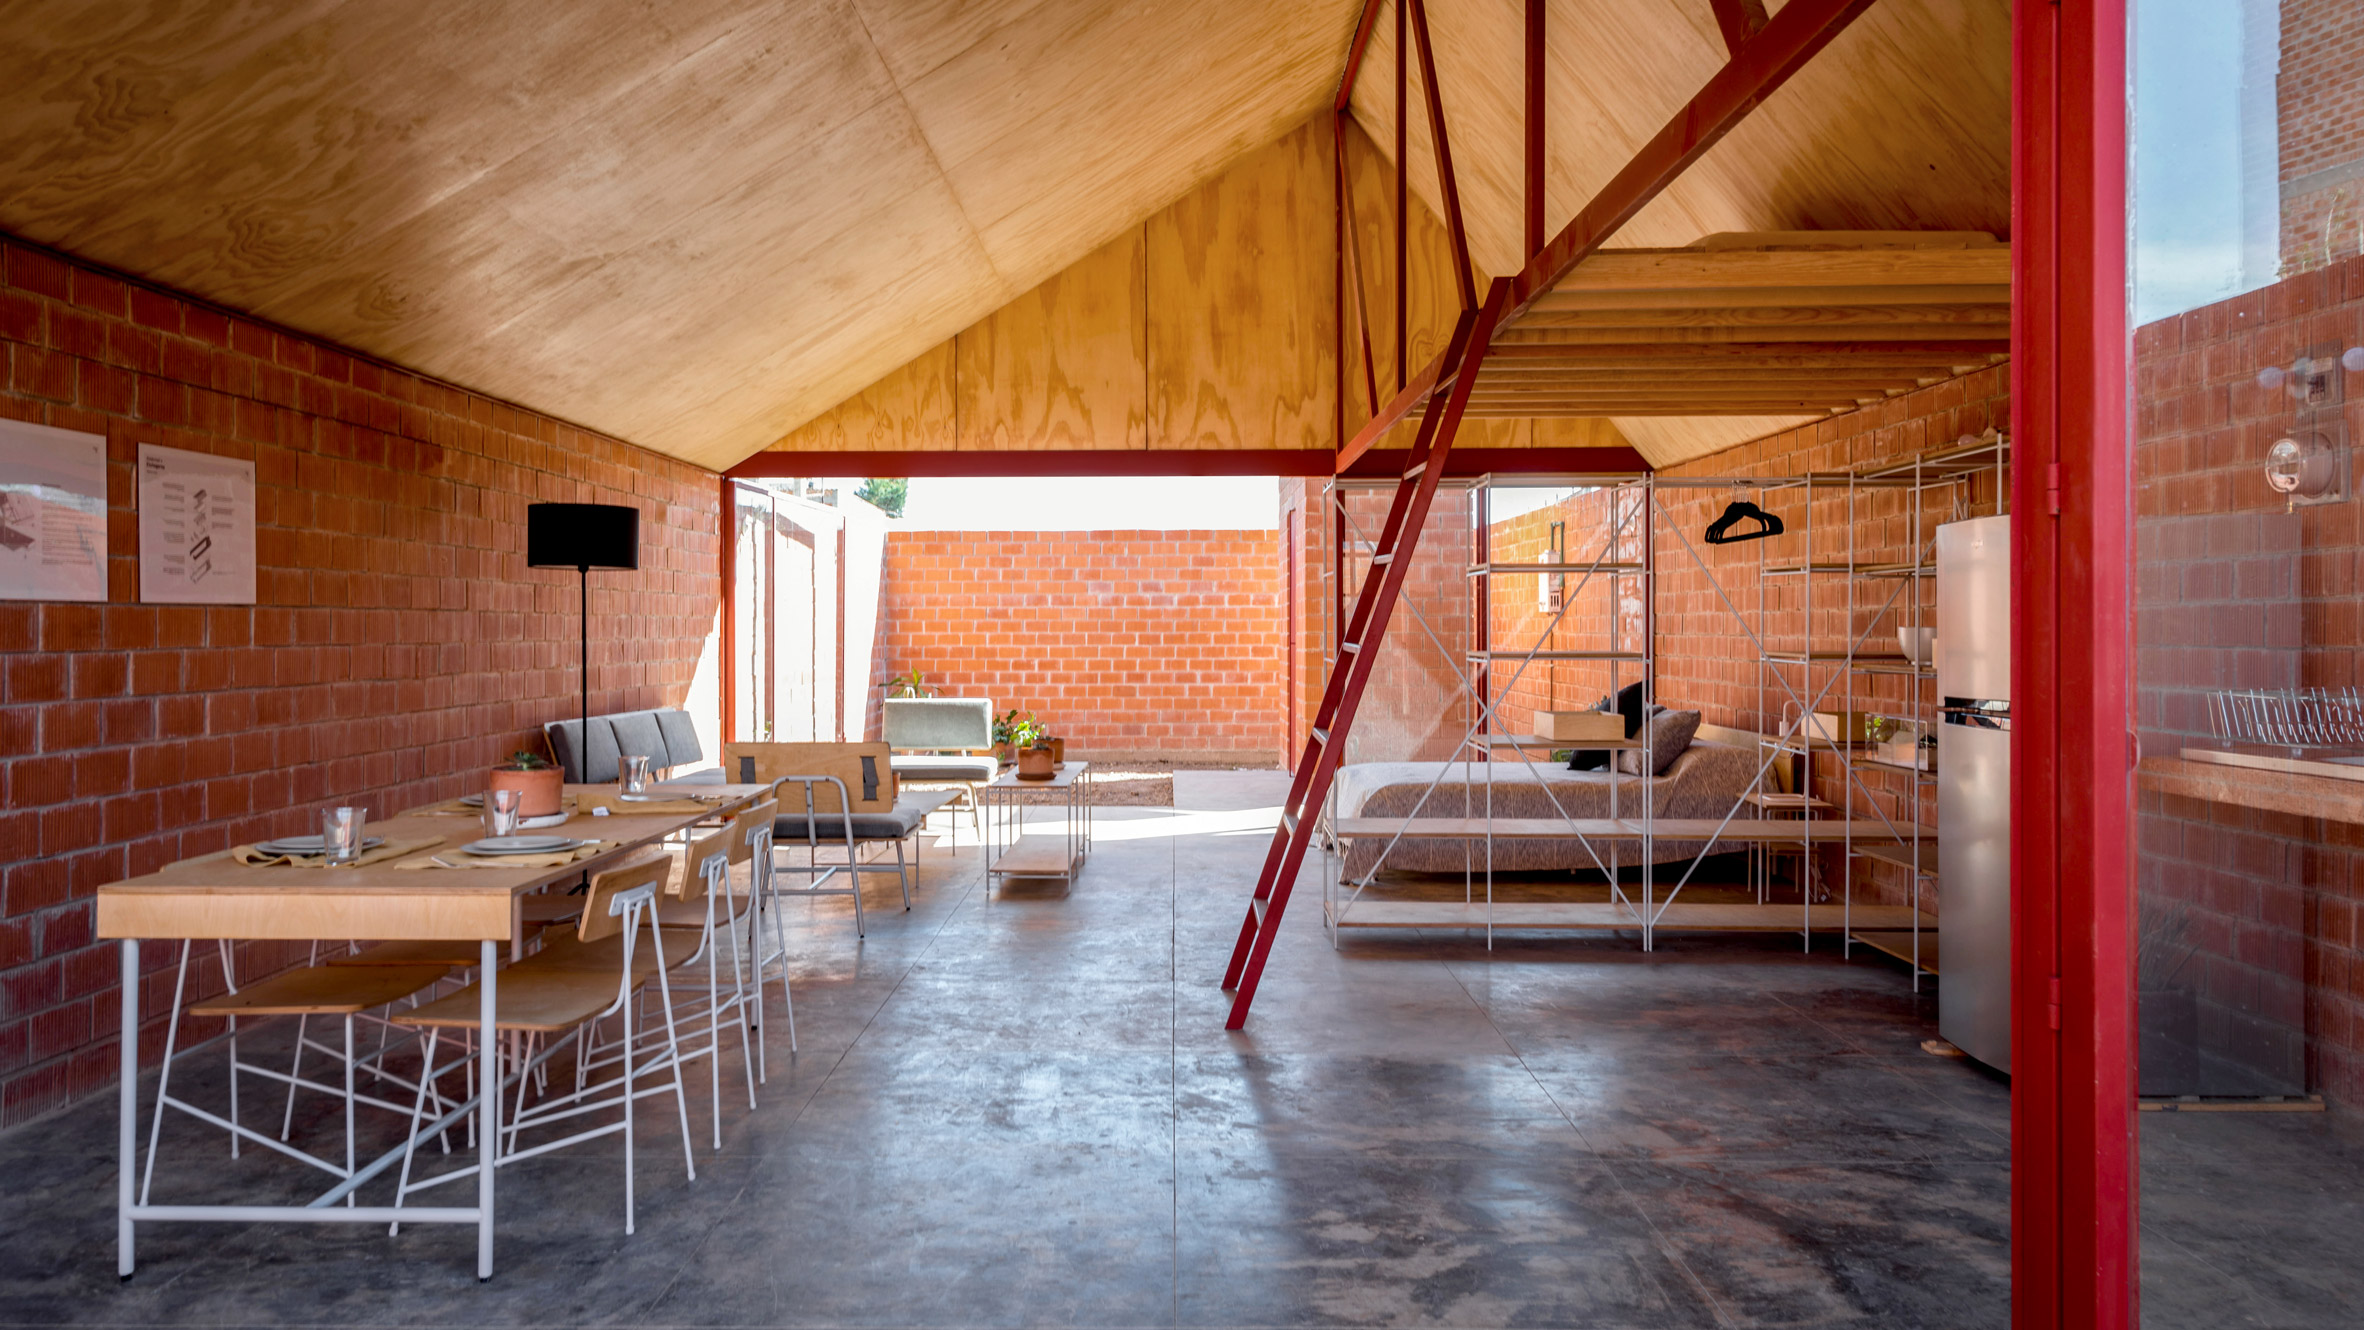 Esrawe Studio Designs Furniture For Social Housing In Mexico